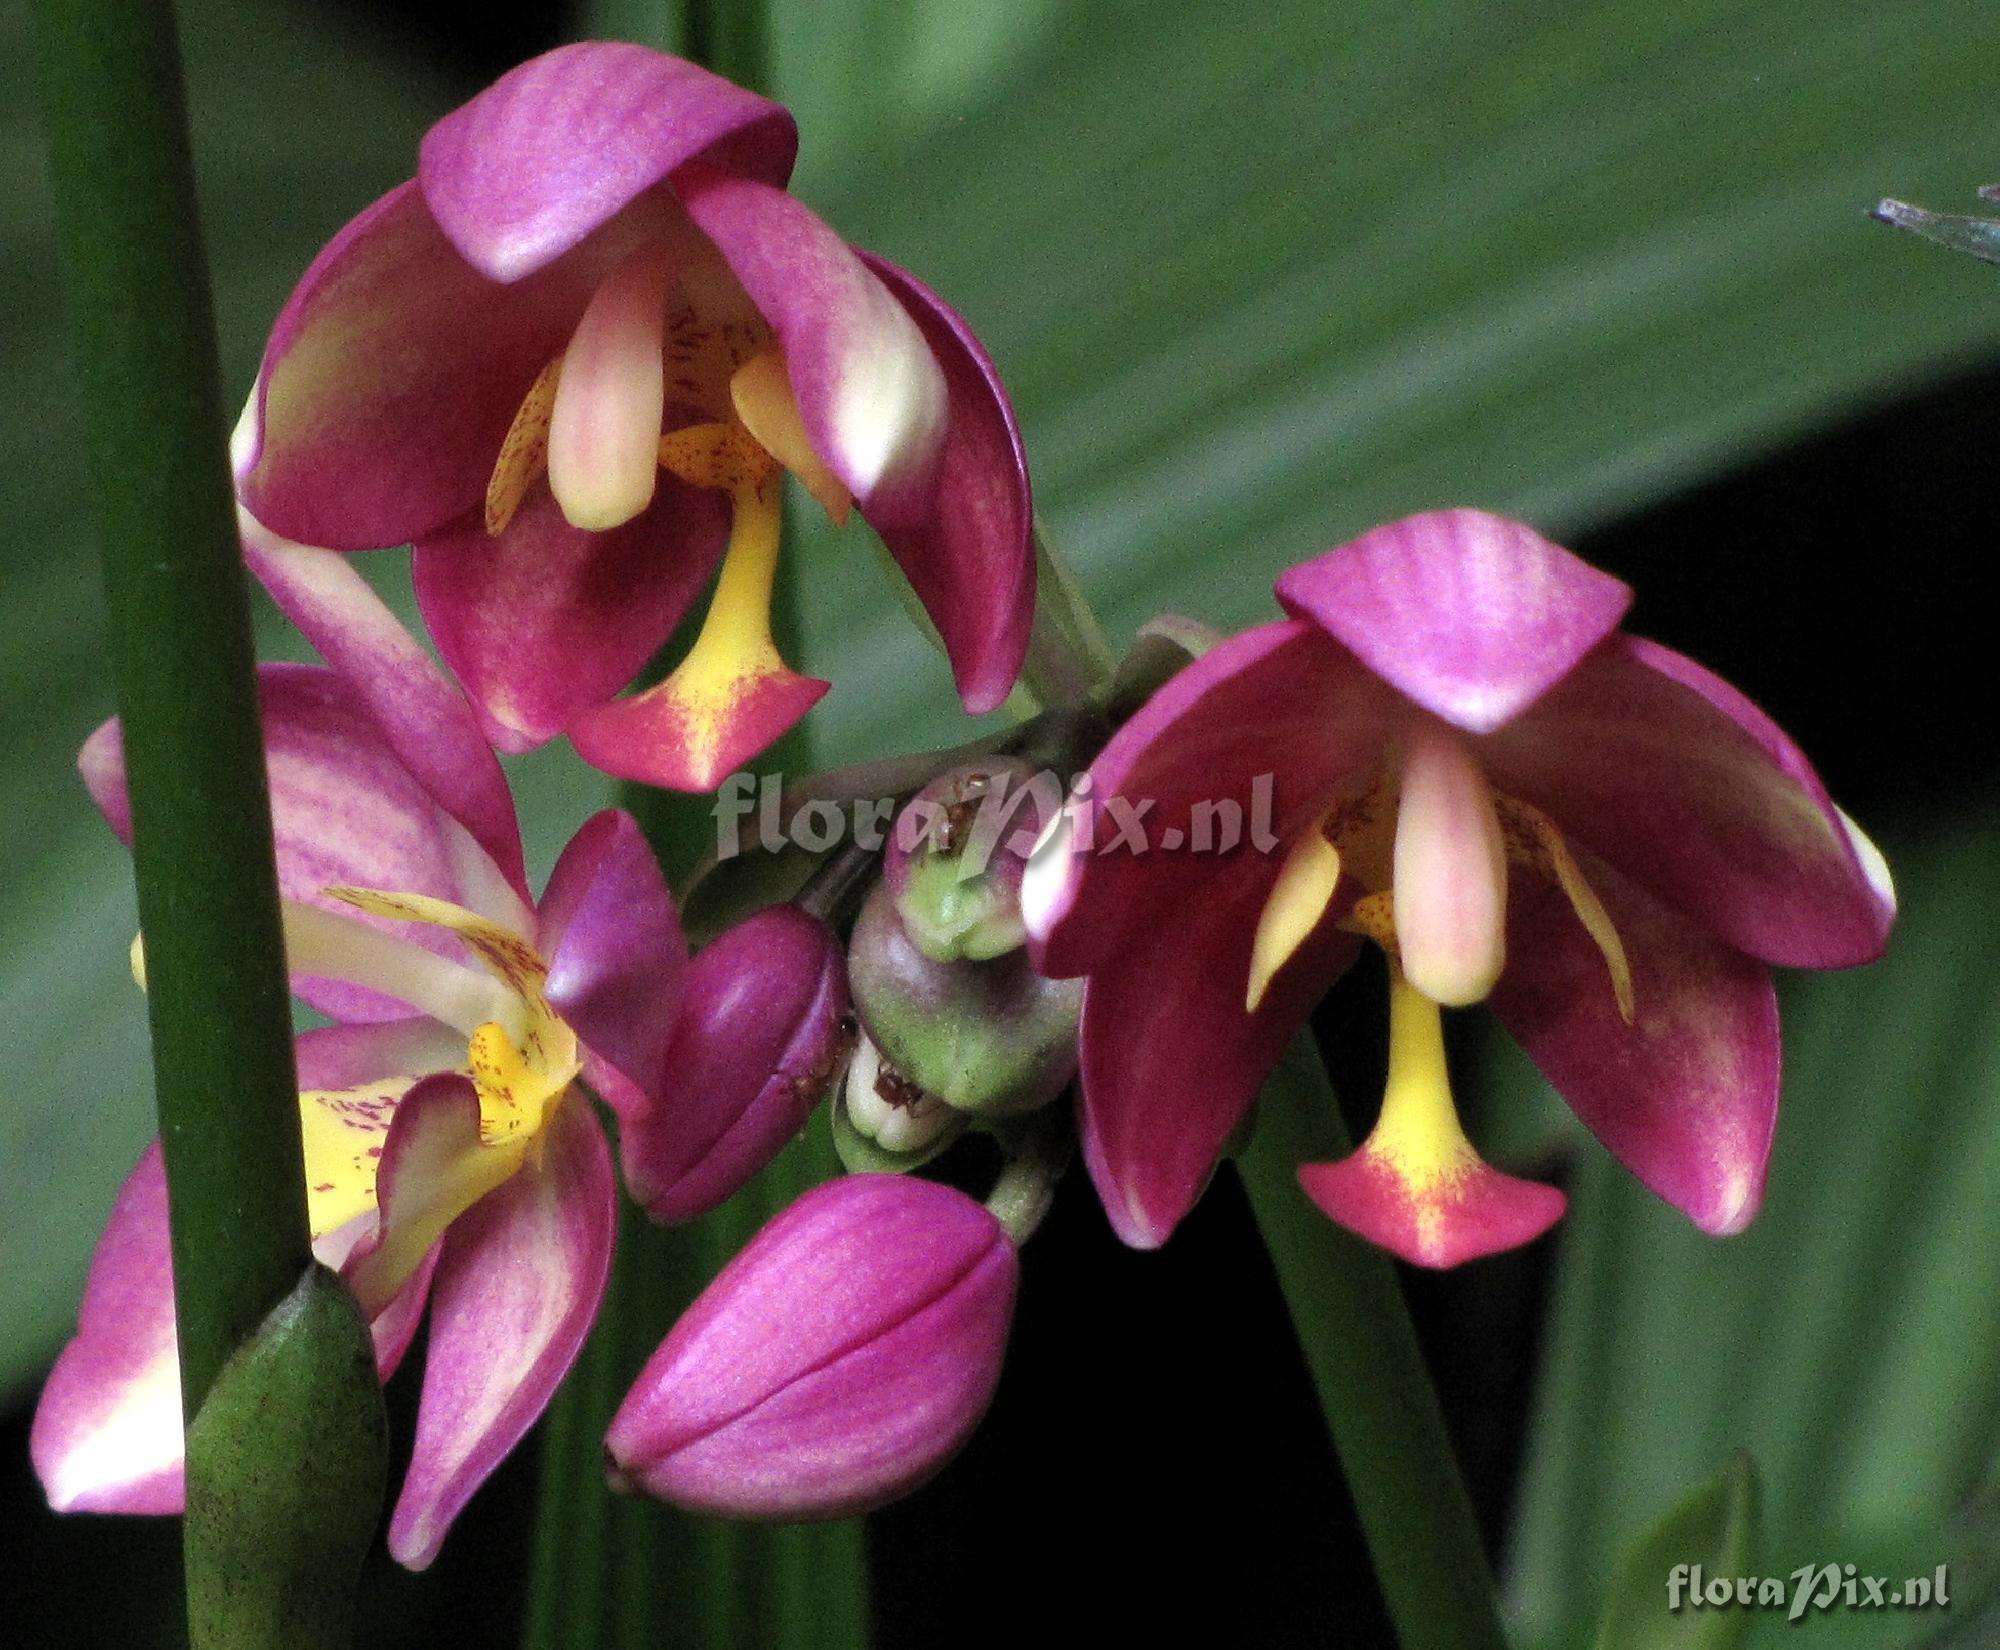 Spathoglottis sp. Orchidaceae